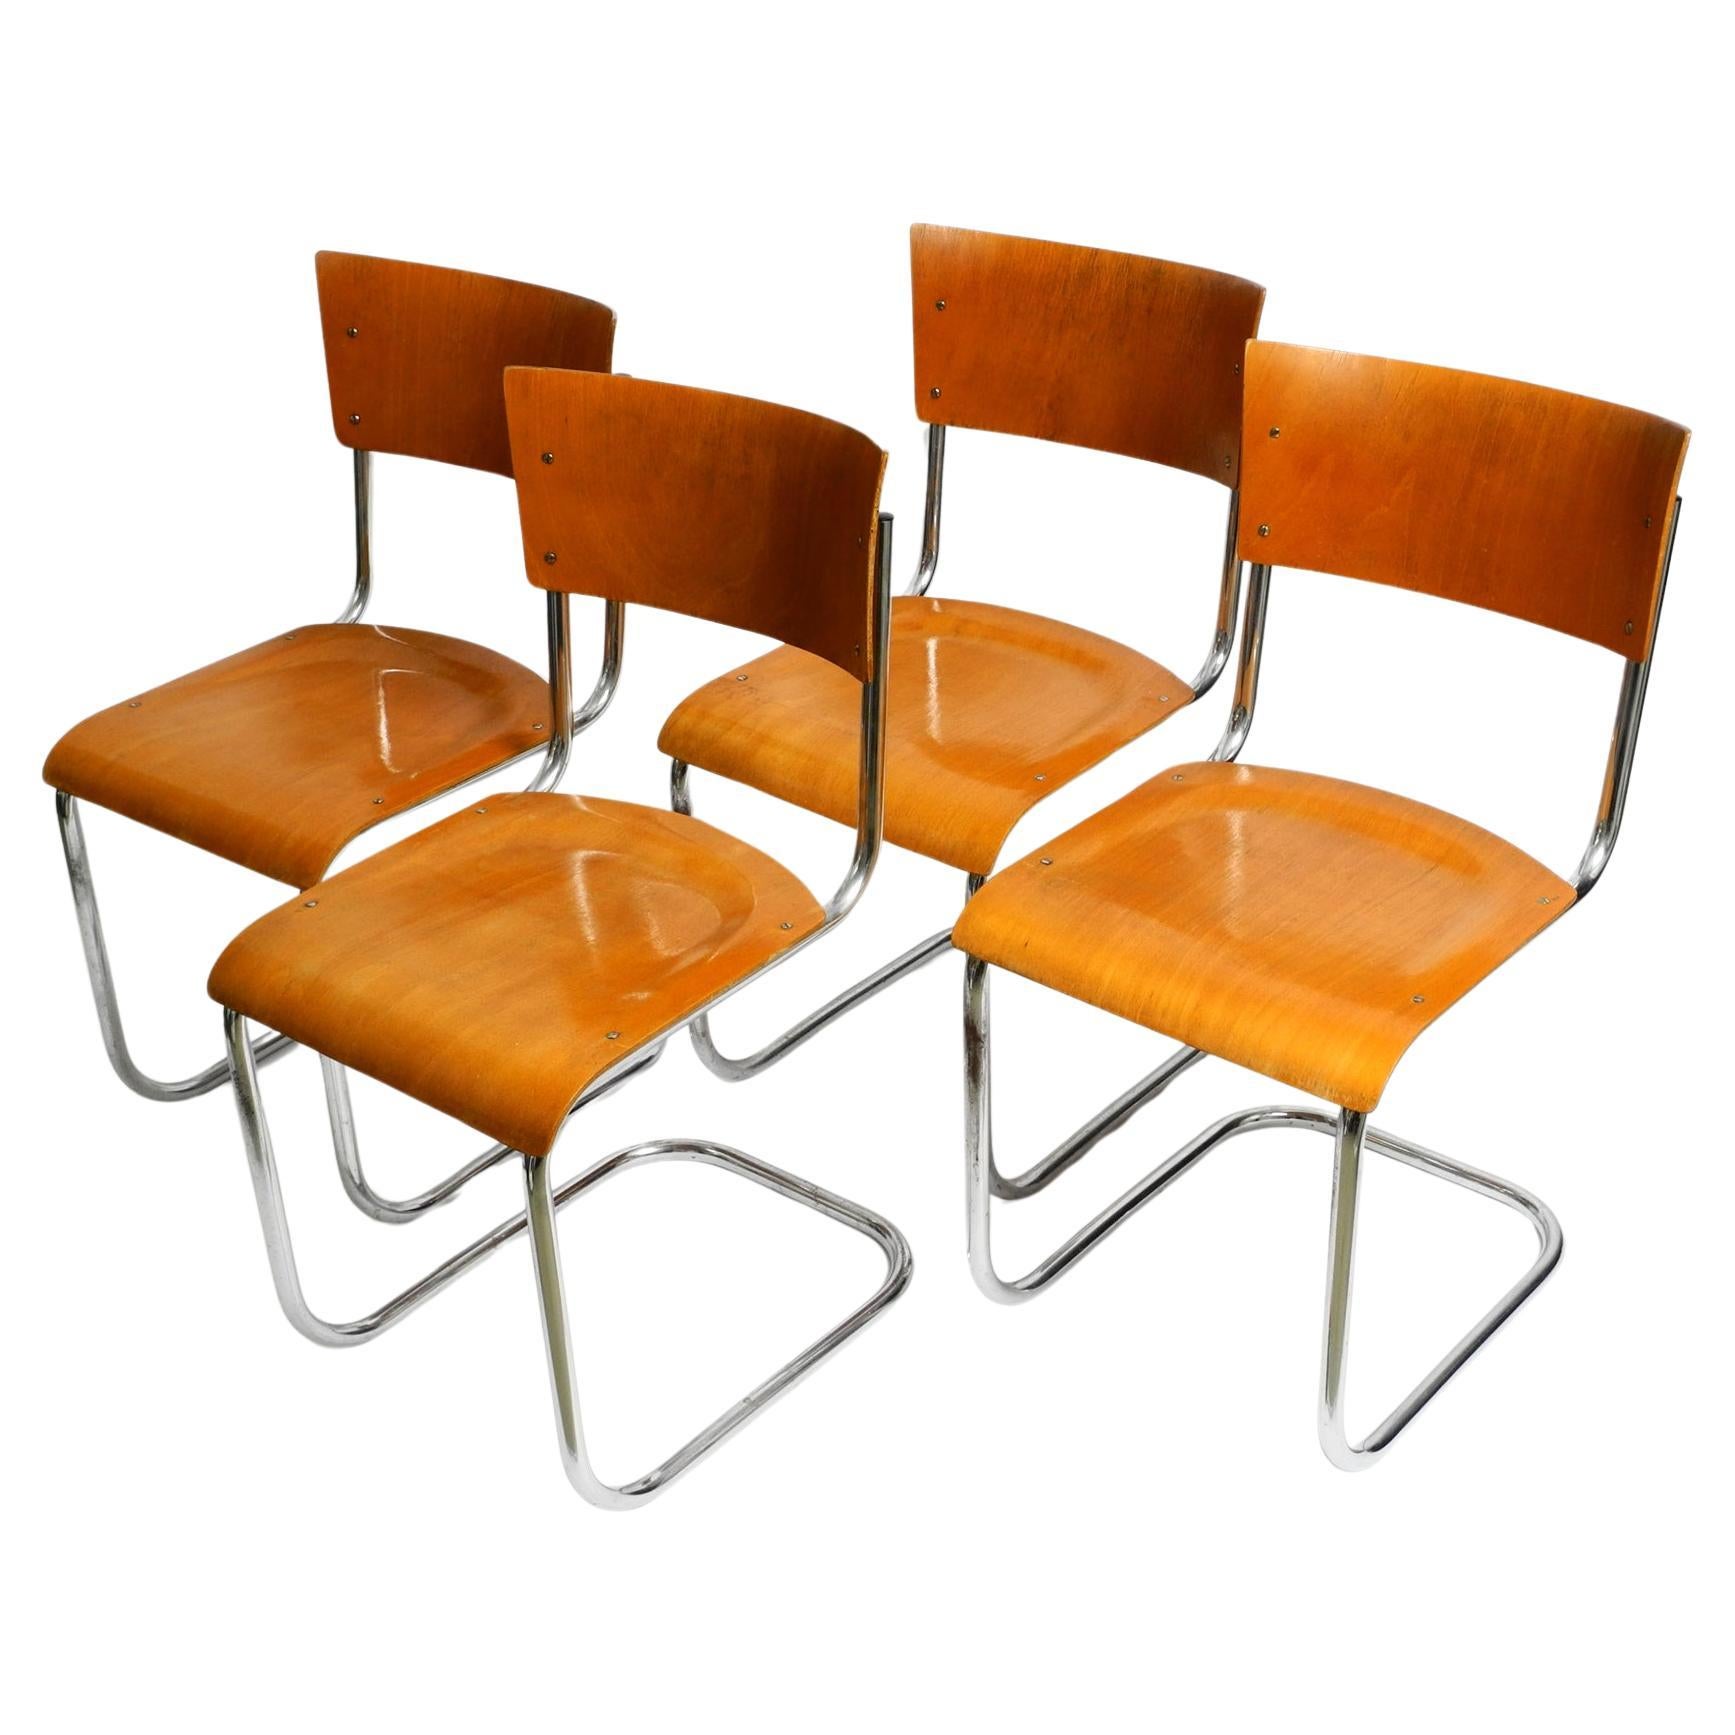 Four 30s cantilever Bauhaus tubular steel chairs by Mart Stam for Robert Slezak